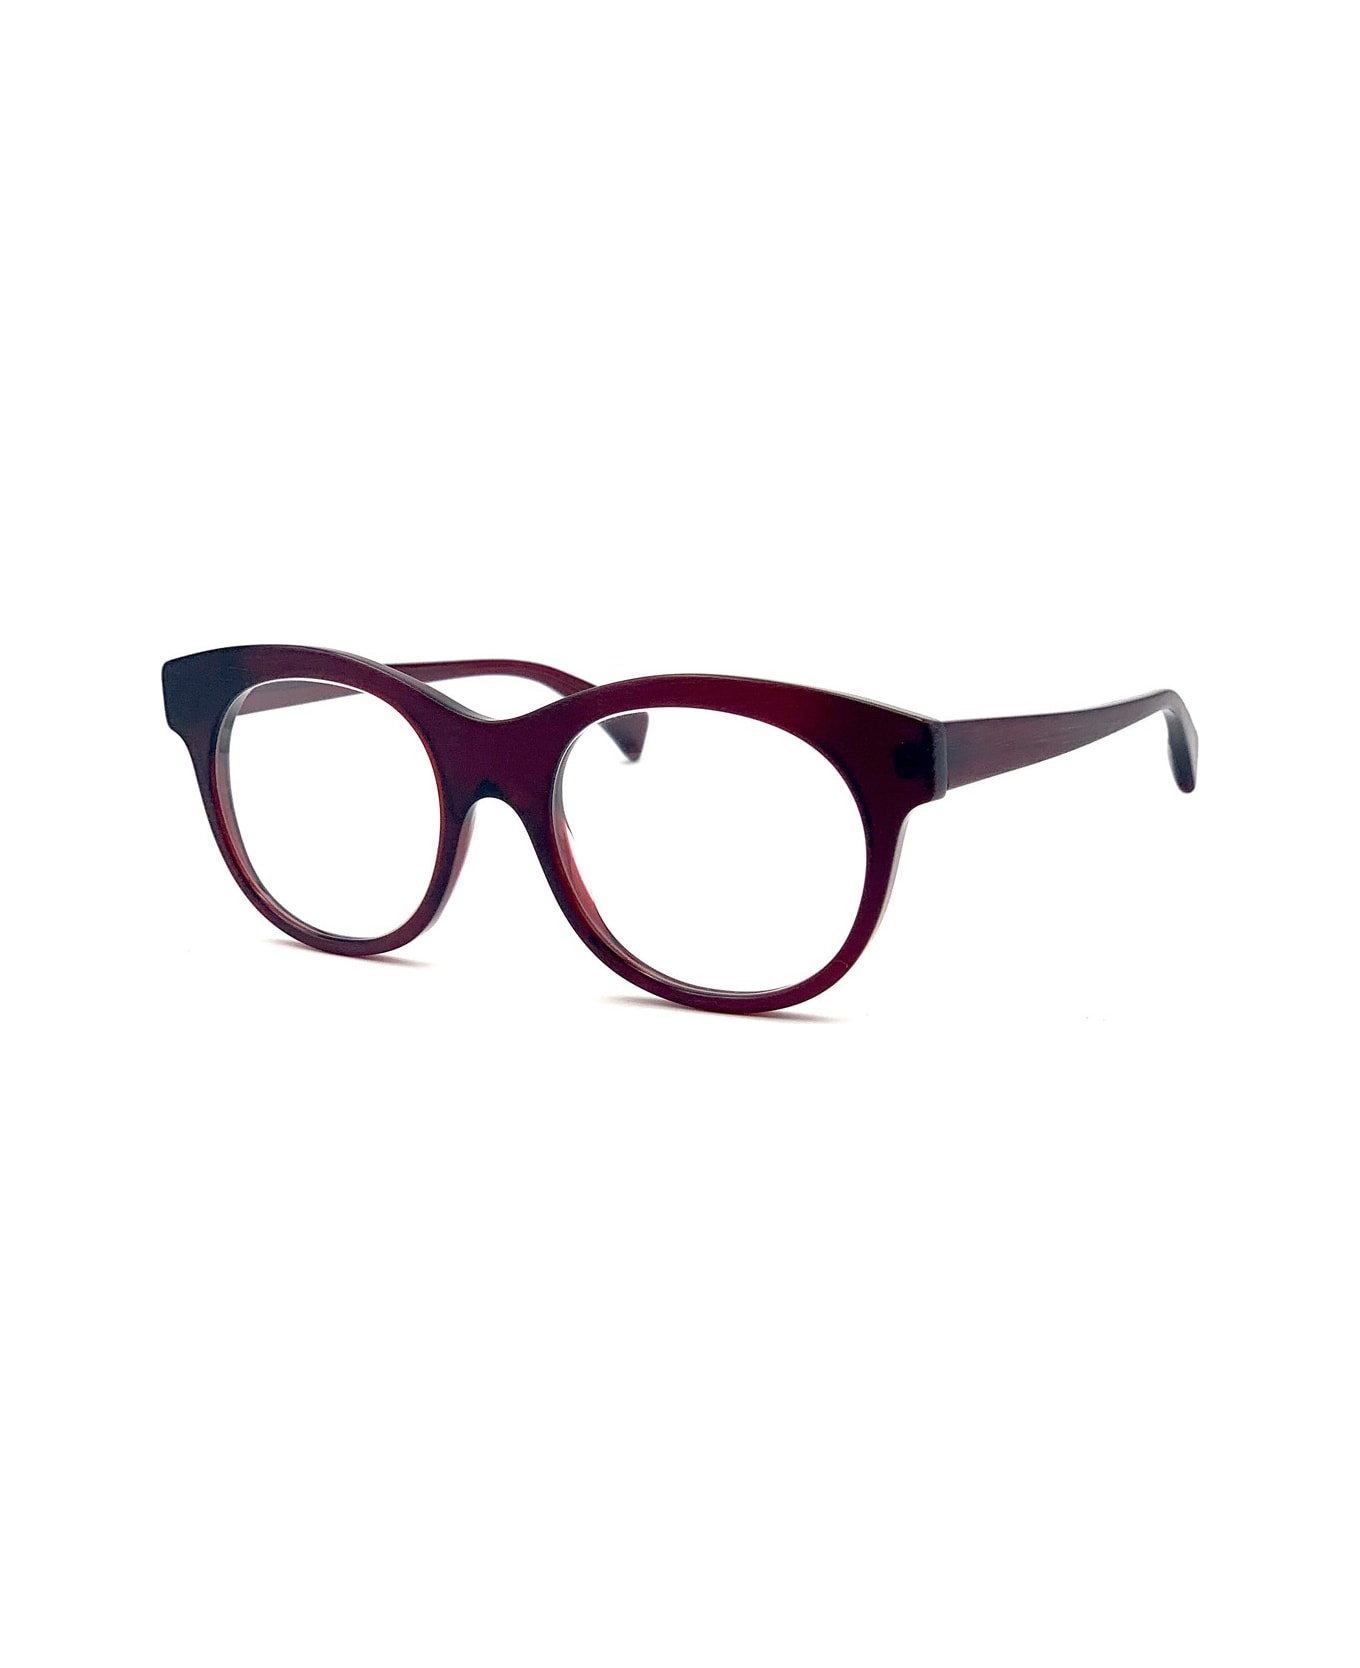 Jacques Durand Port-cros Xl170 Glasses - Rosso